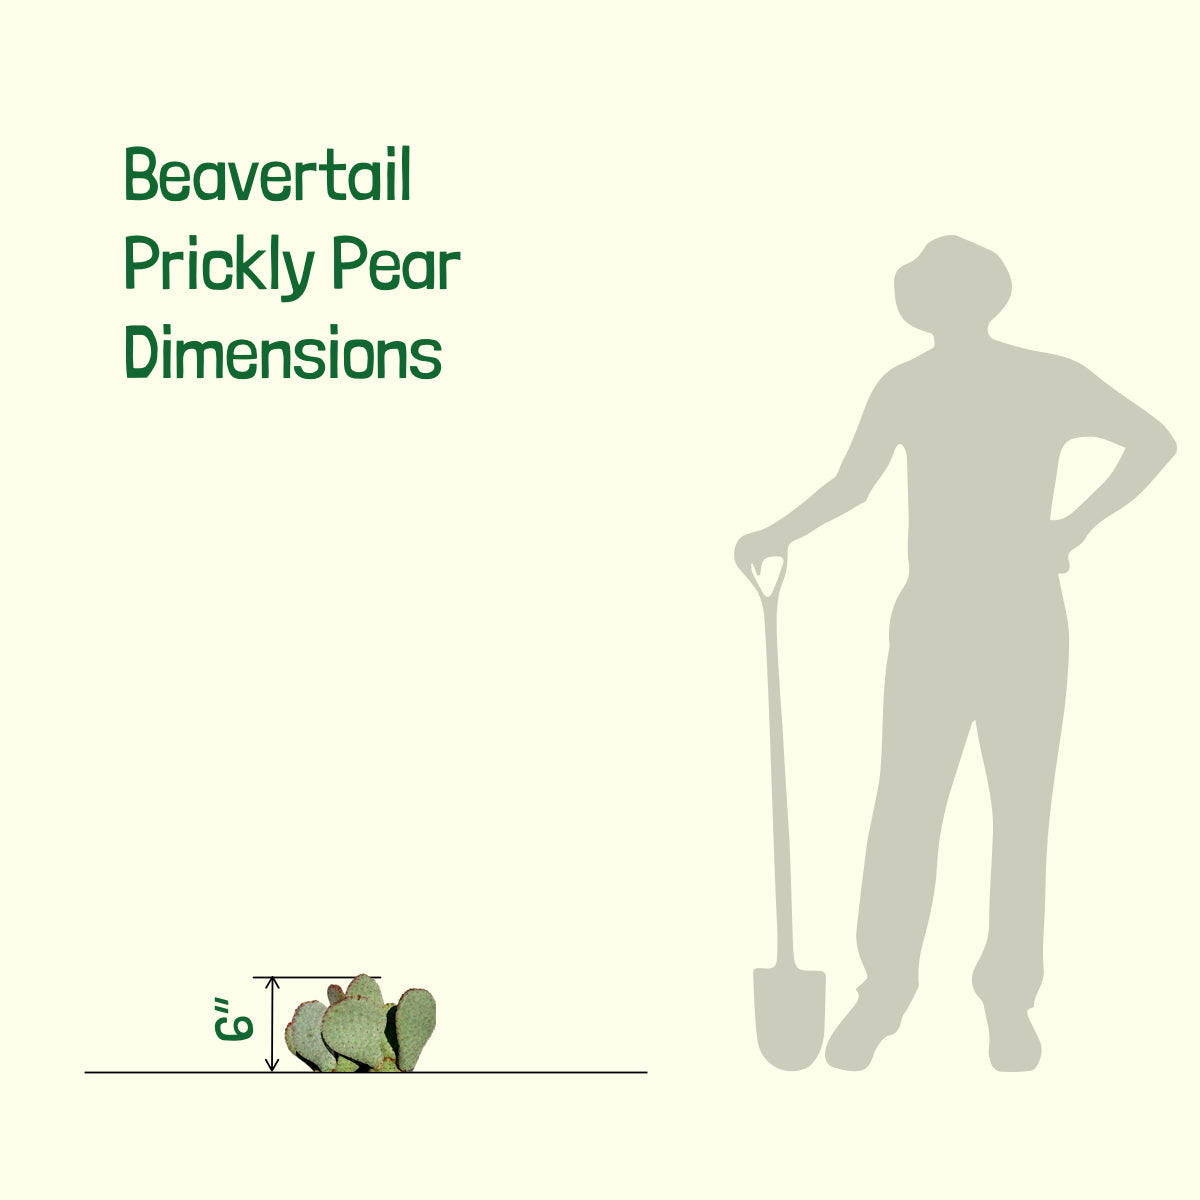 Beavertail Prickly Pear